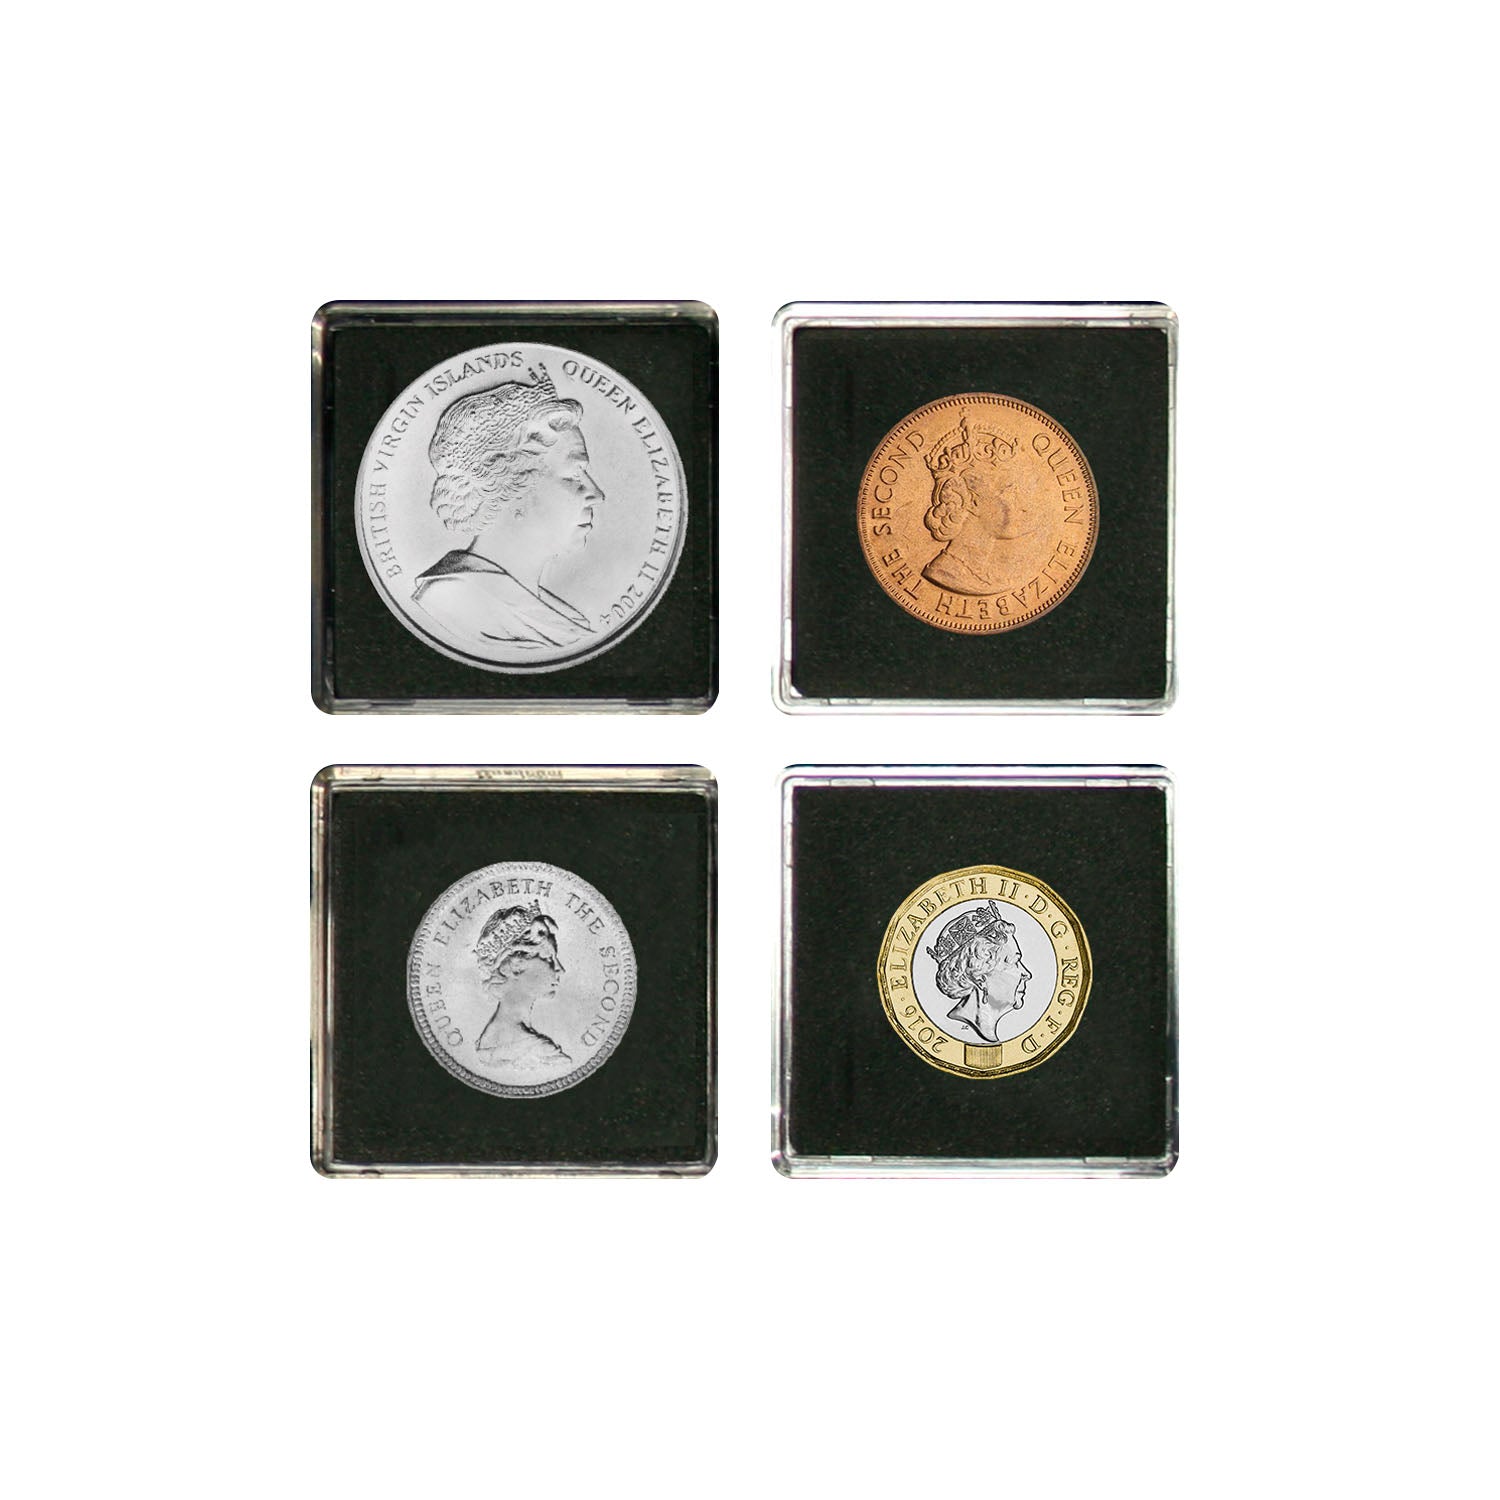 The Queen Premium Coin Collection